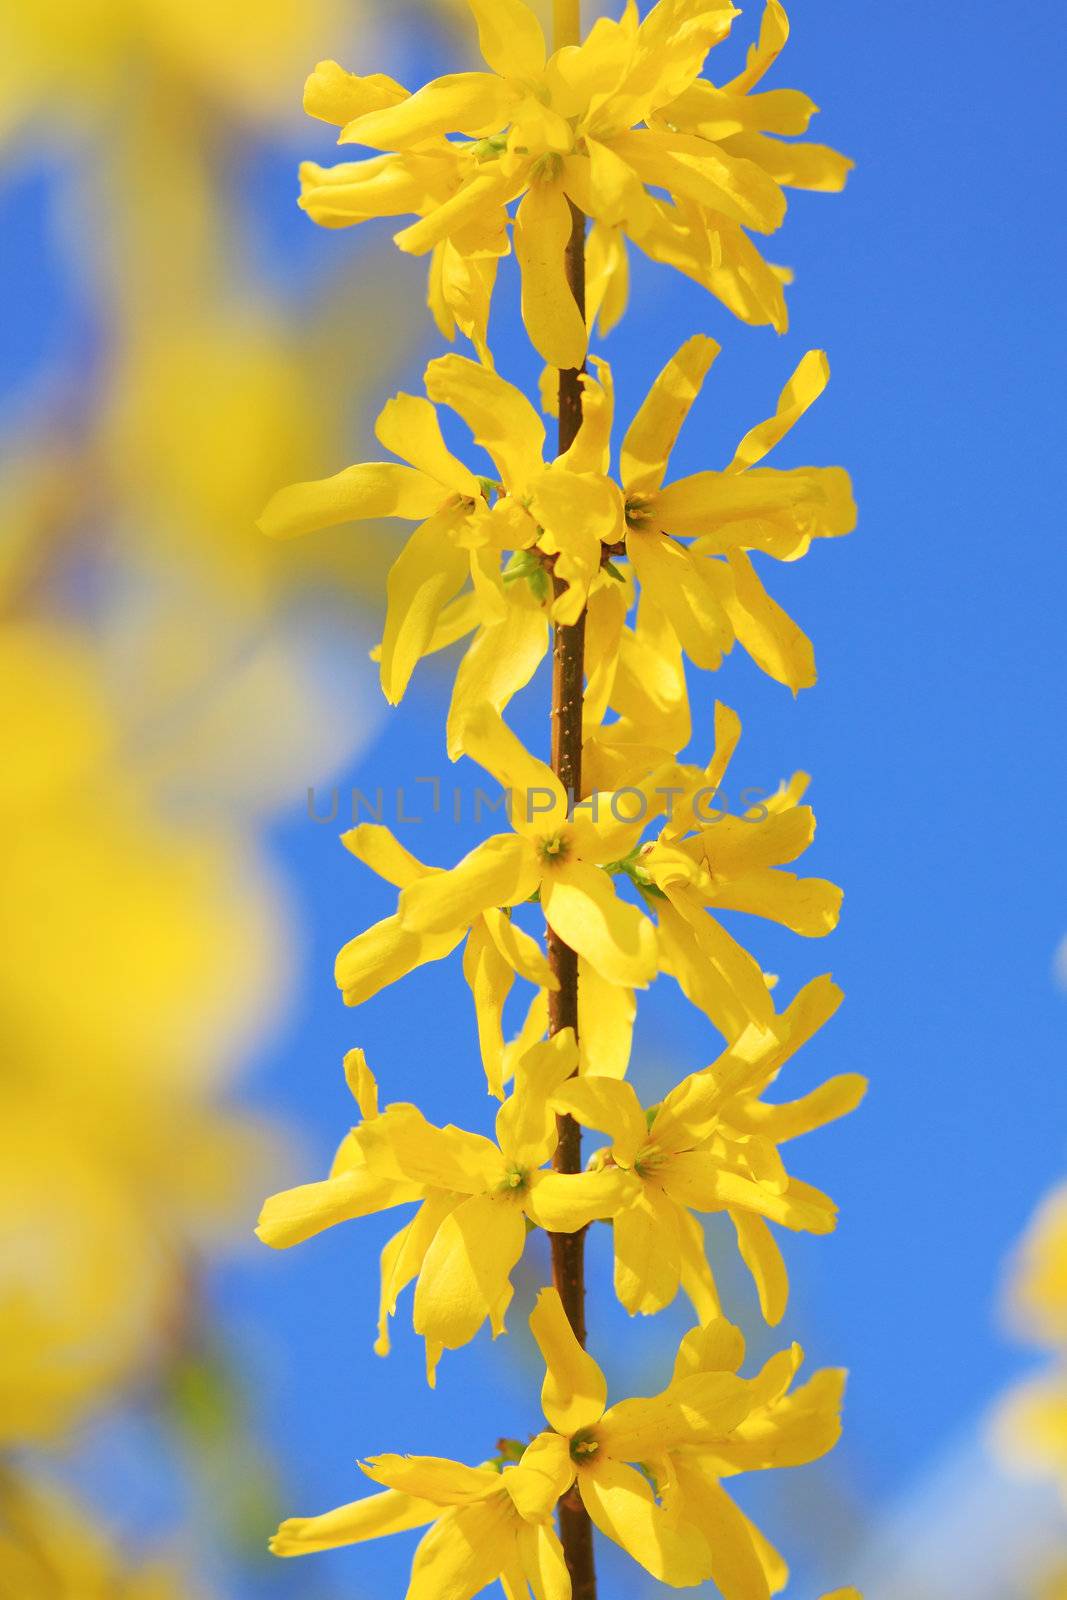 Forsythia flowering branch on a blue sky